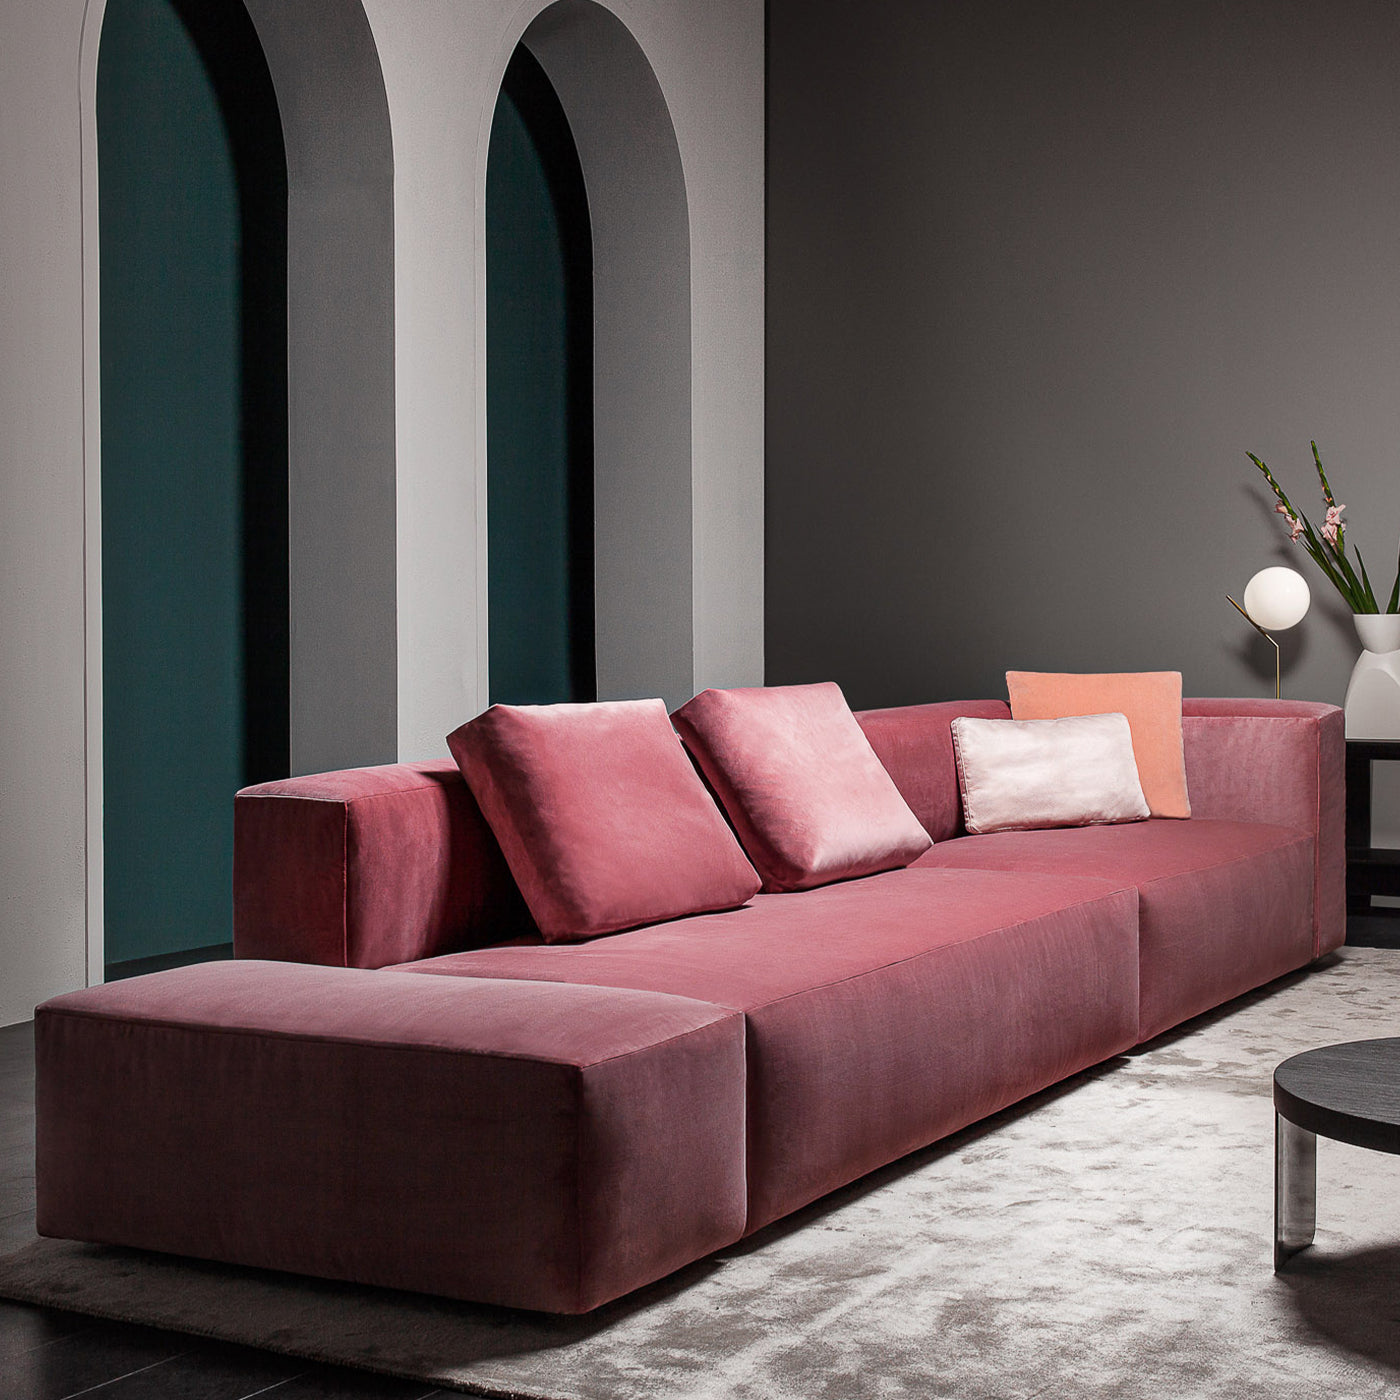 Cube Pink Sofa by Gianluigi Landoni - Alternative view 1